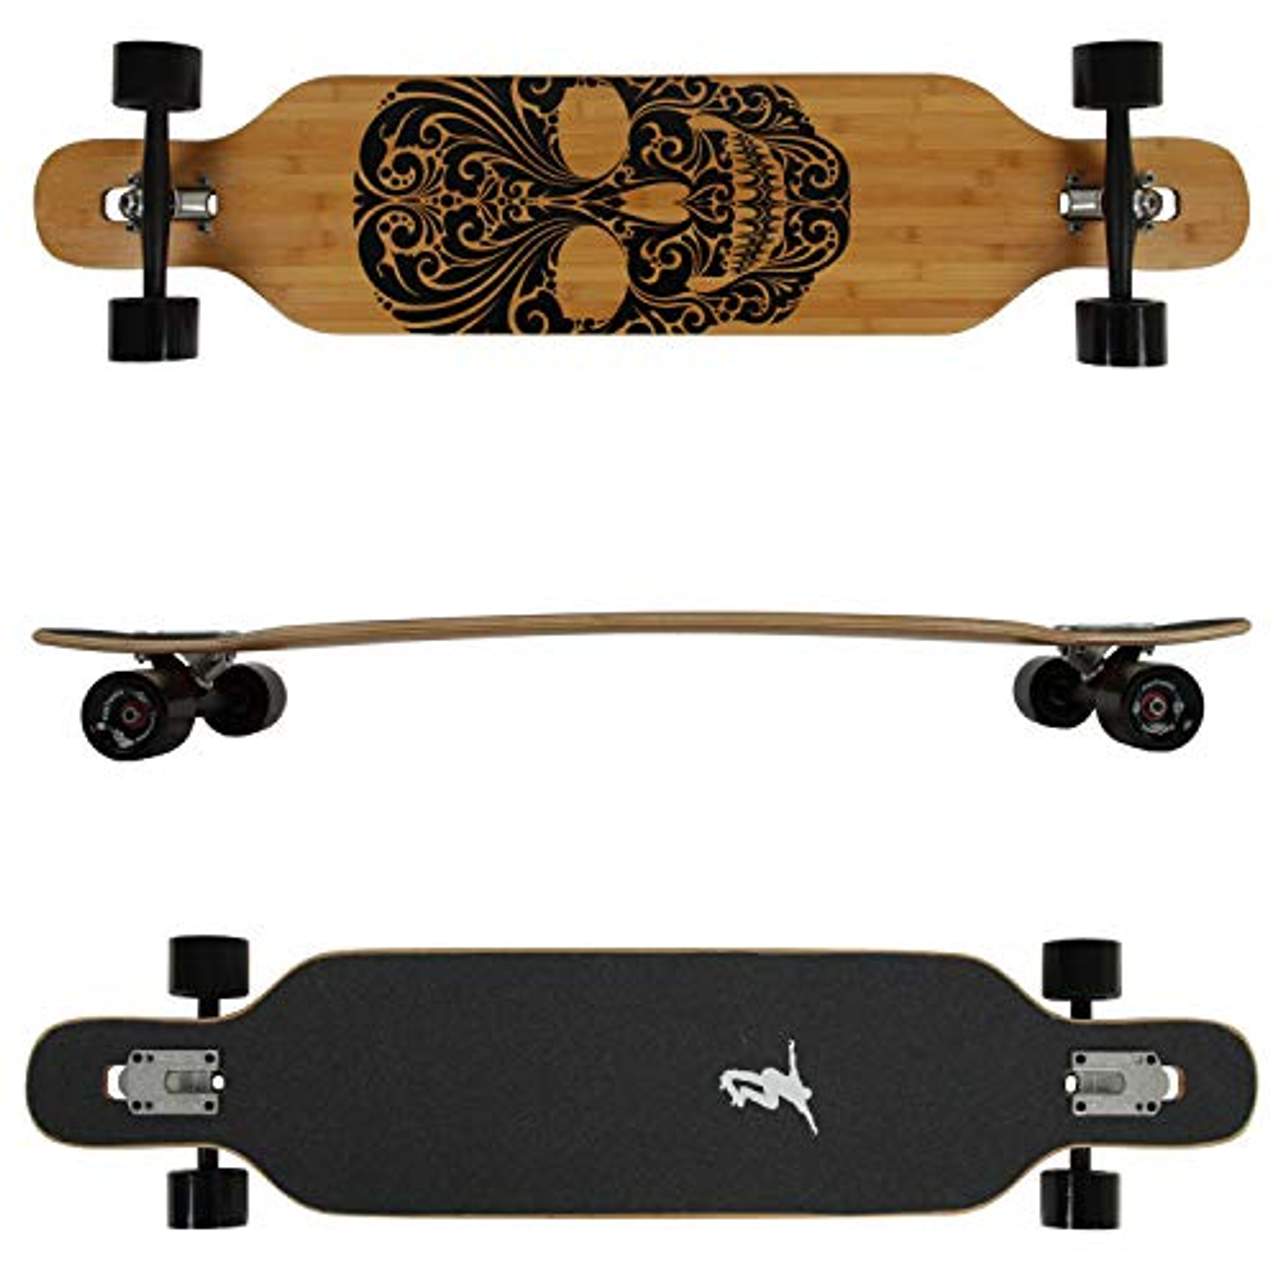 FunTomia Camber Longboard Skateboard Drop Through Cruiser Komplettboard